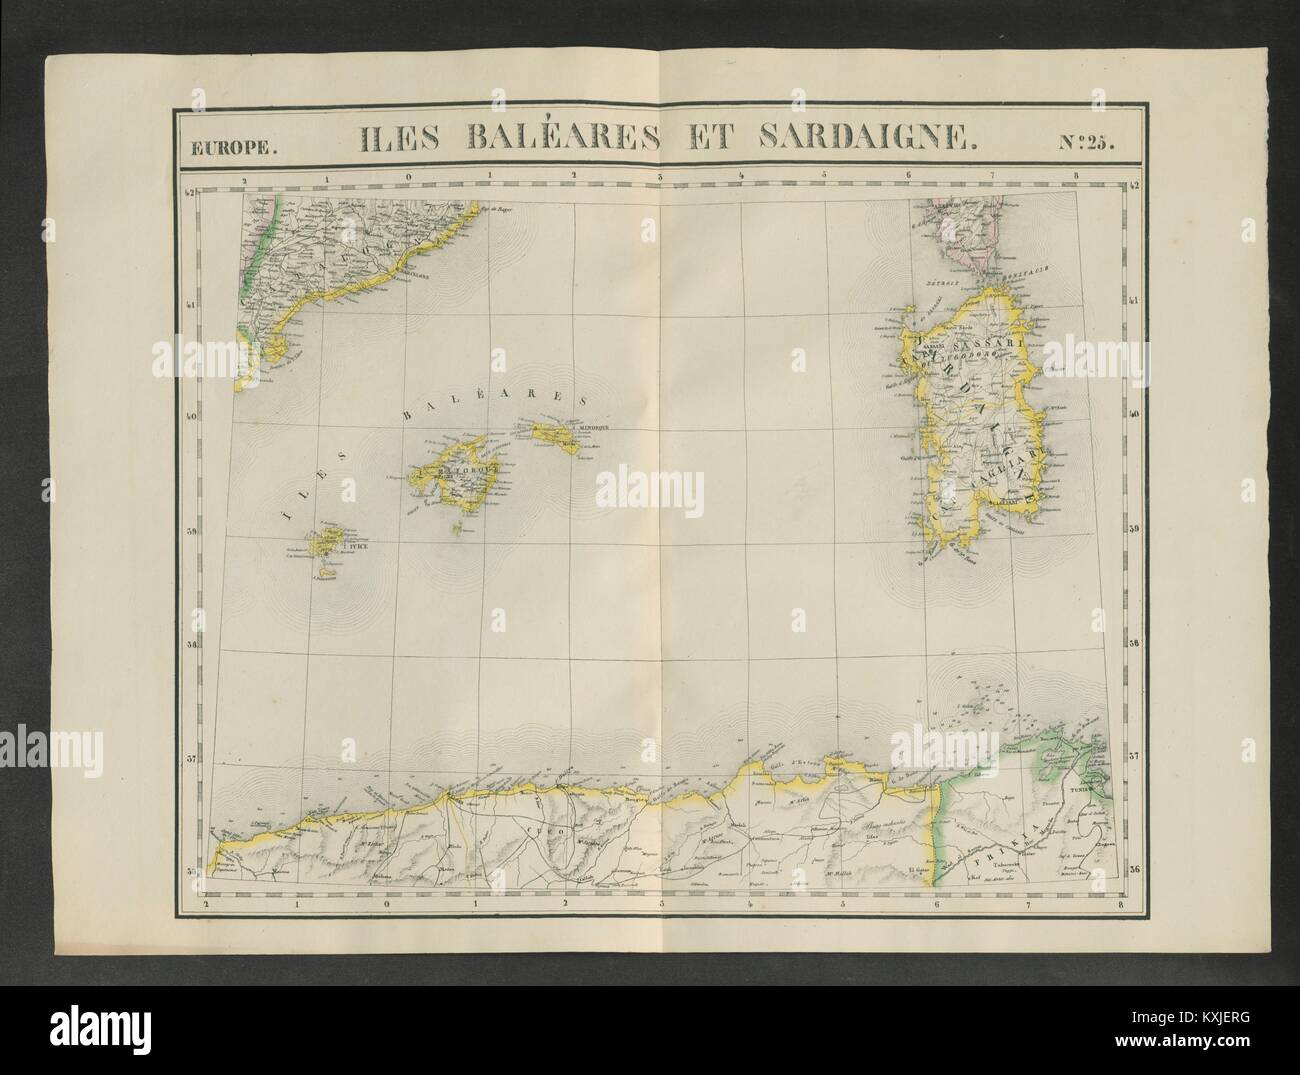 'Iles Baléares et Sardaigne' #25 W. Med Sardinia Balearics VANDERMAELEN 1827 map Stock Photo